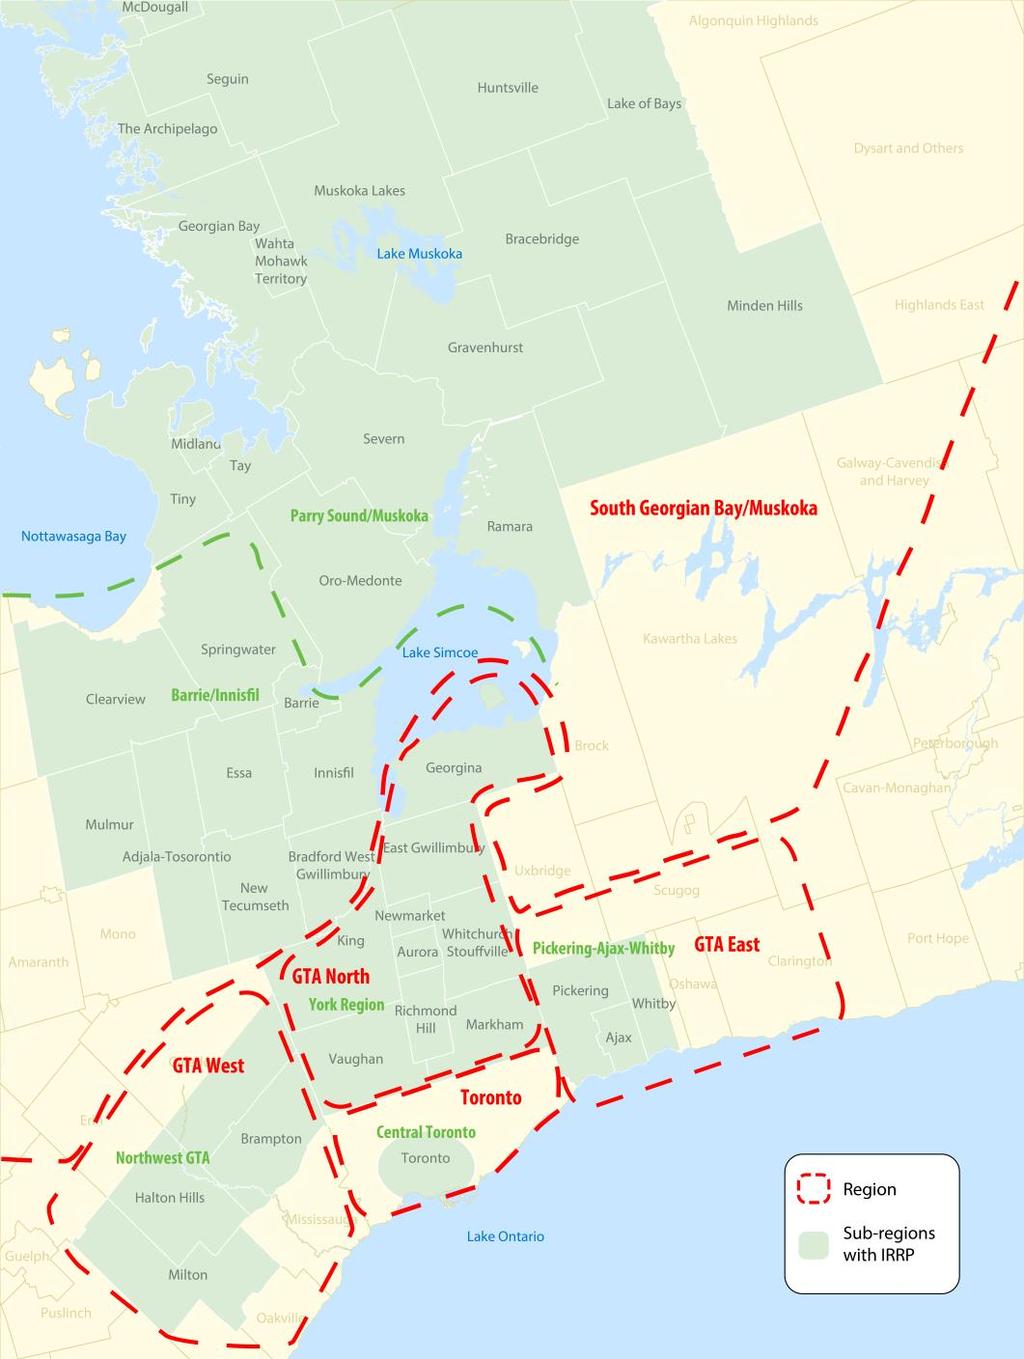 Regions in GTA and Central Ontario 5 regions: 1. GTA West 2.